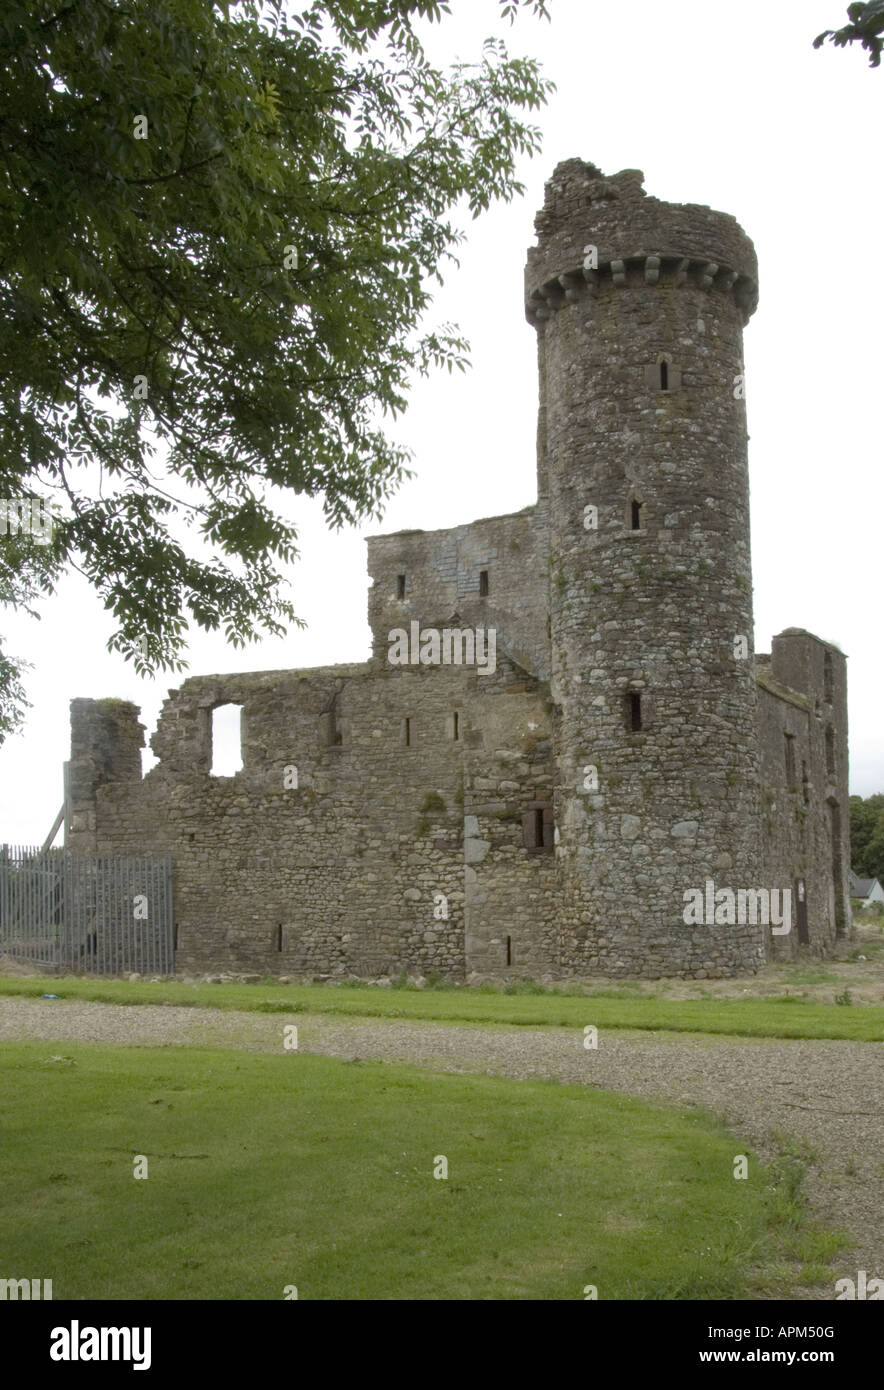 Featherd Burg Co Wexford Ireland Www Osheaphotography com Stockfoto